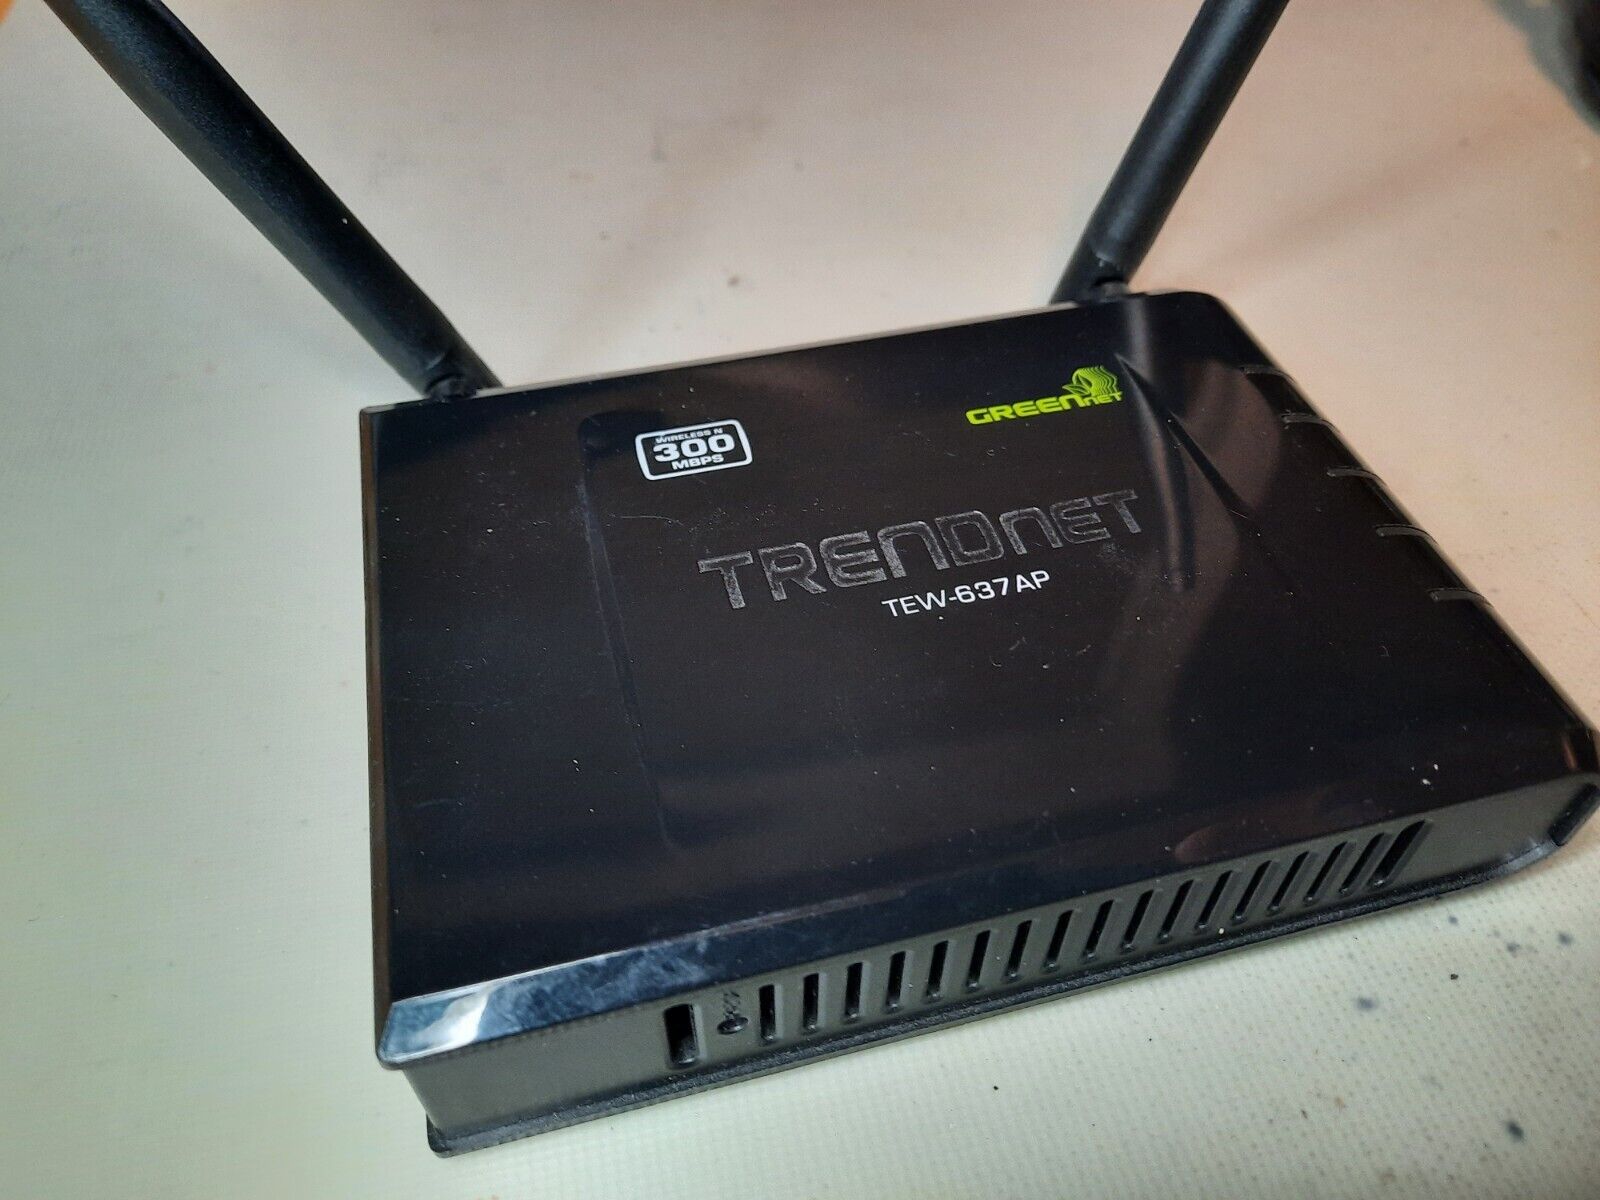 TRENDnet 300 Mbps Wireless Easy-N-Upgrader (TEW-637AP)